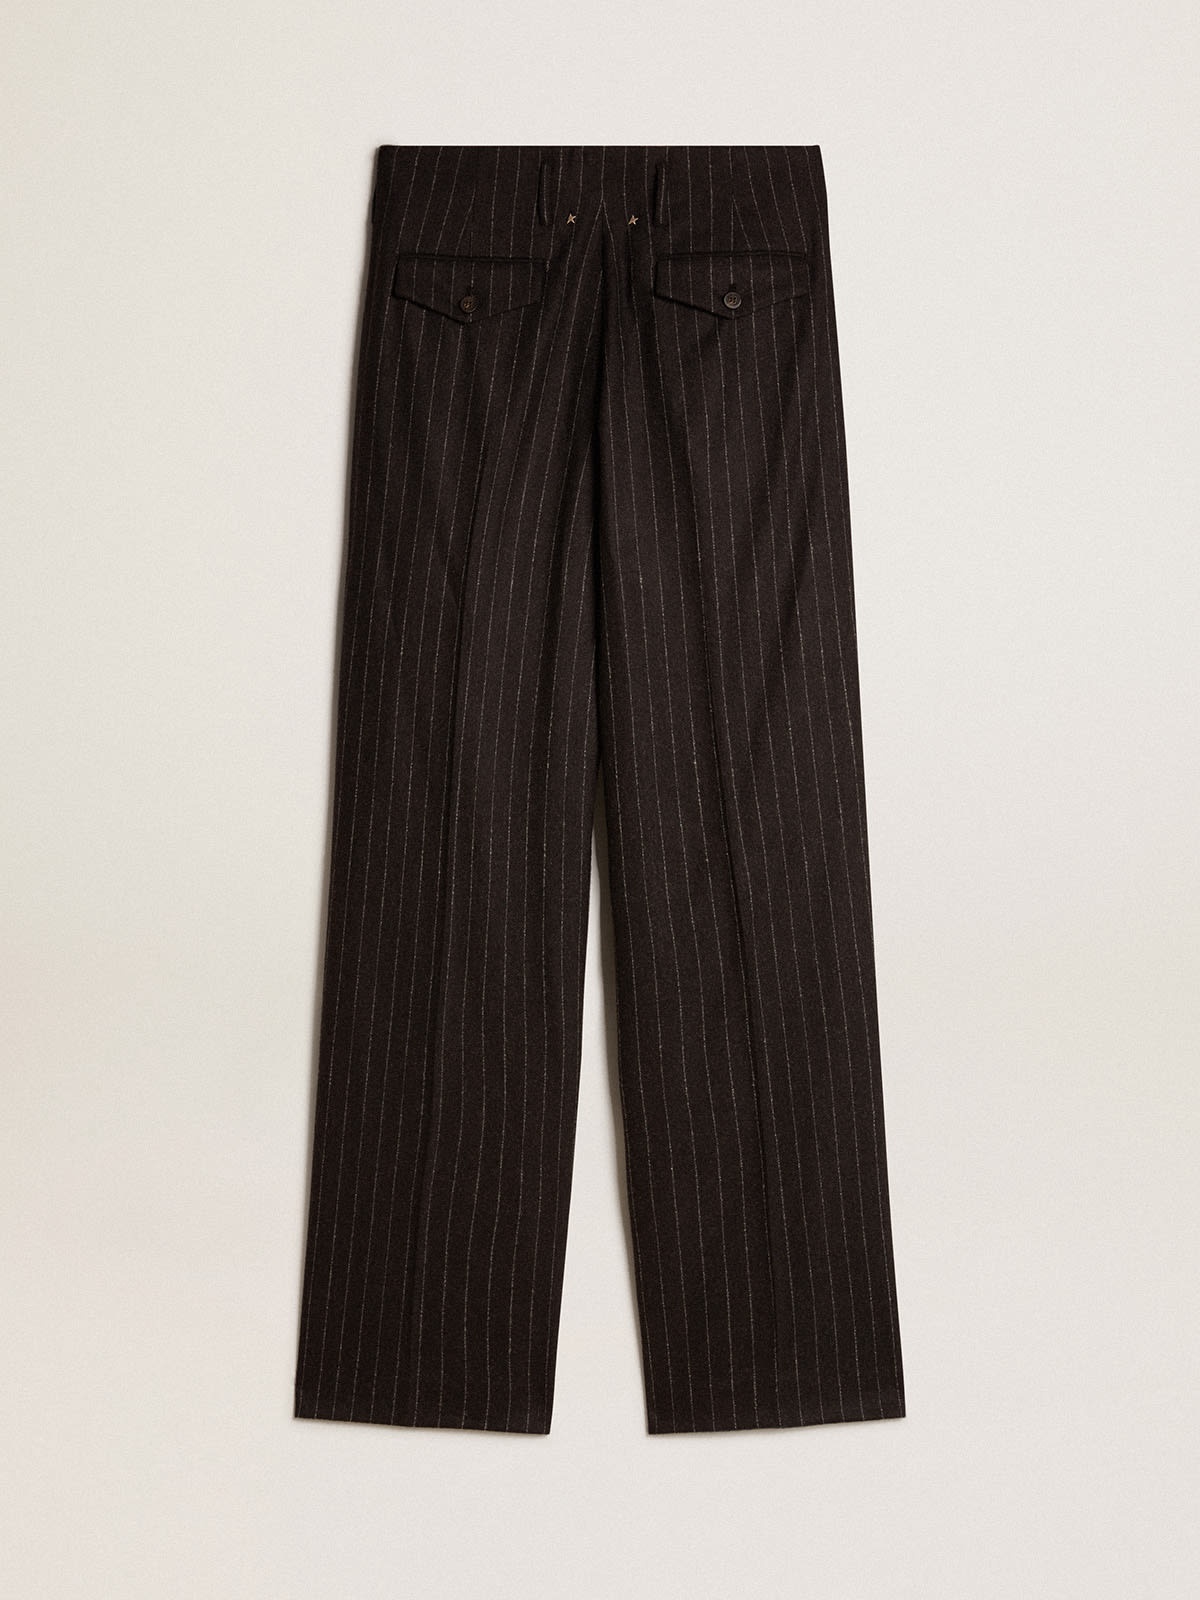 Women’s pants in dark gray wool - 5